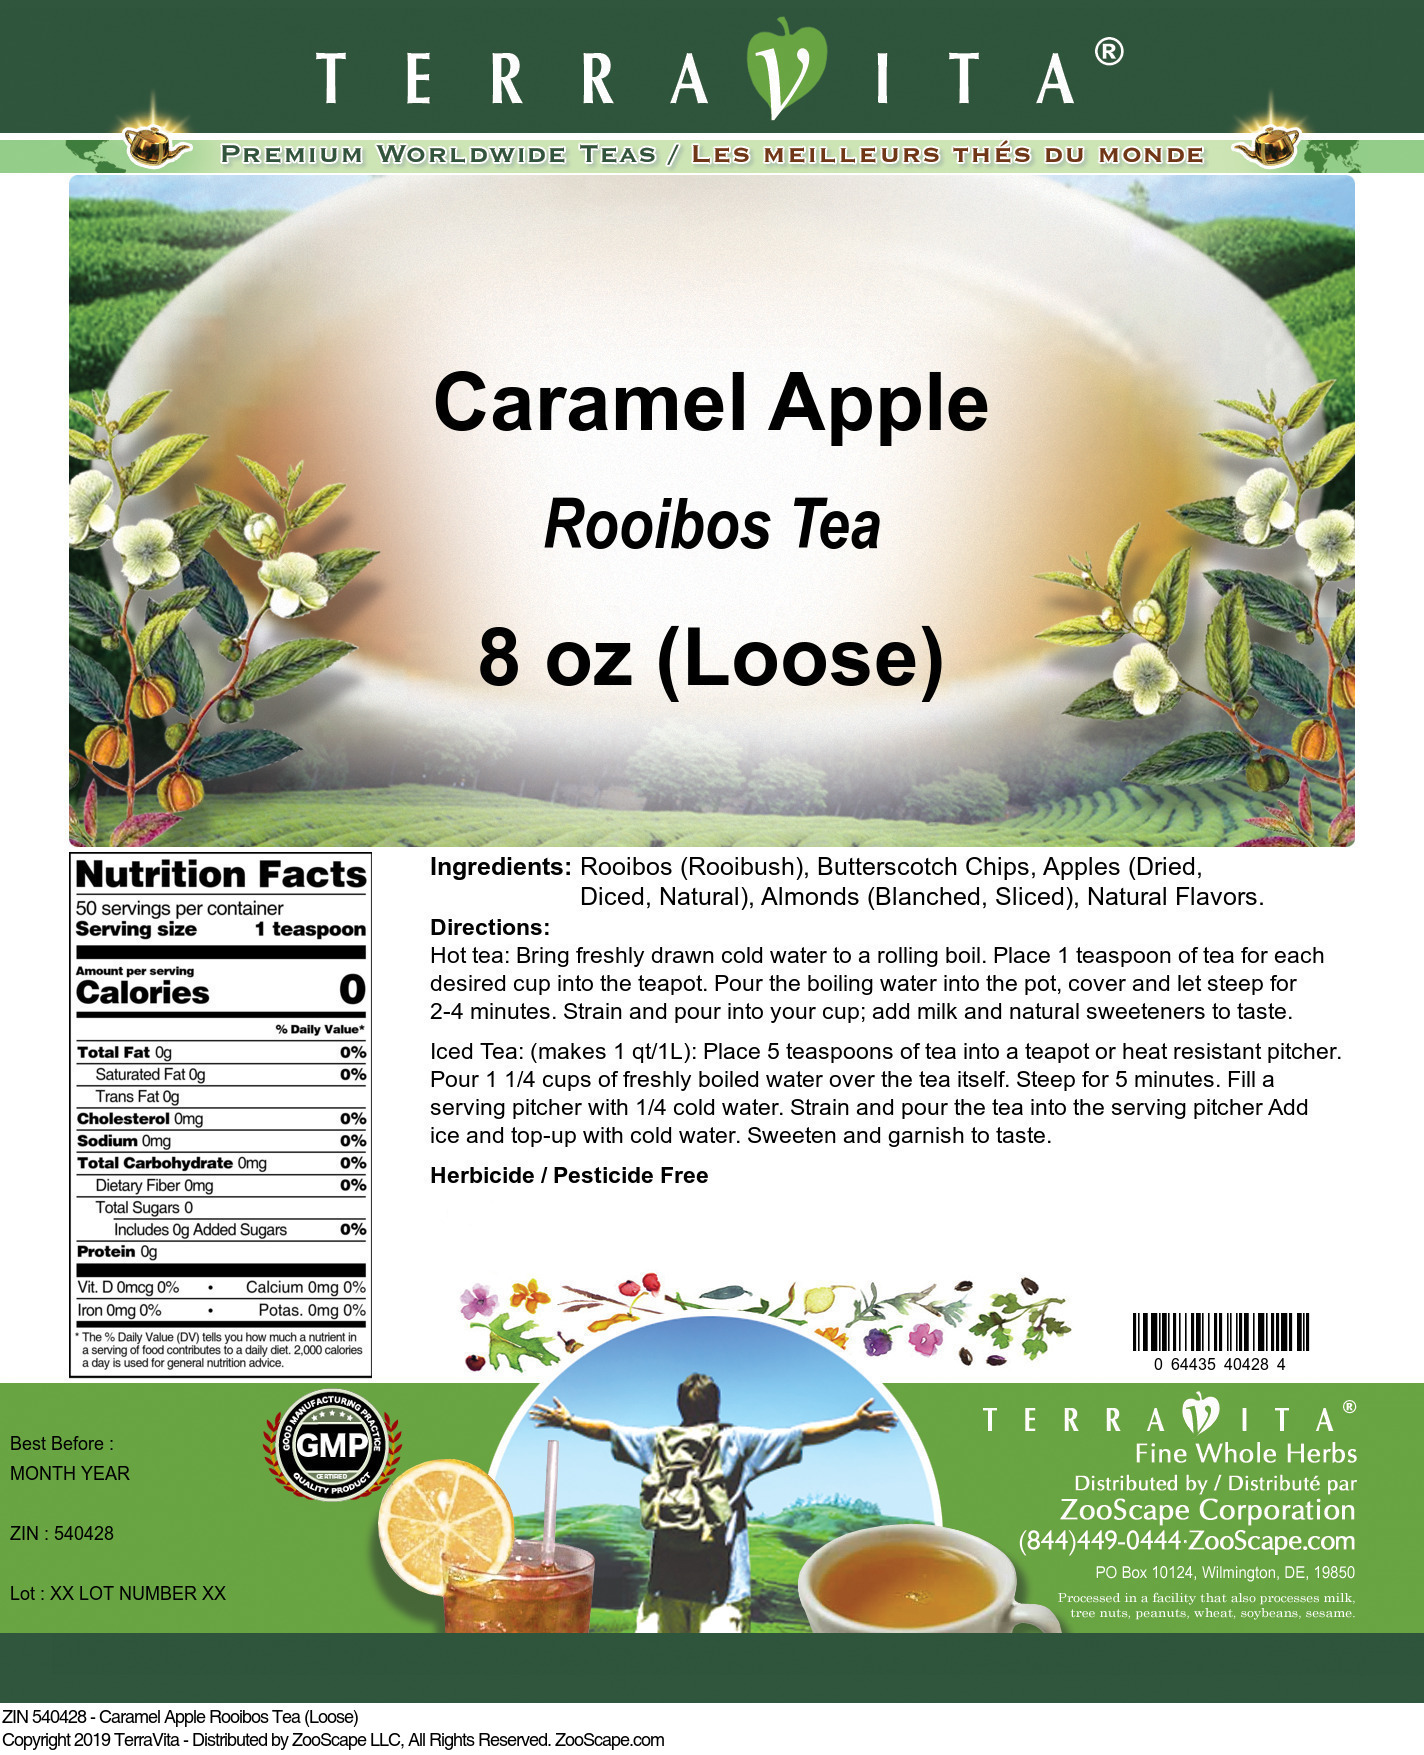 Caramel Apple Rooibos Tea (Loose) - Label